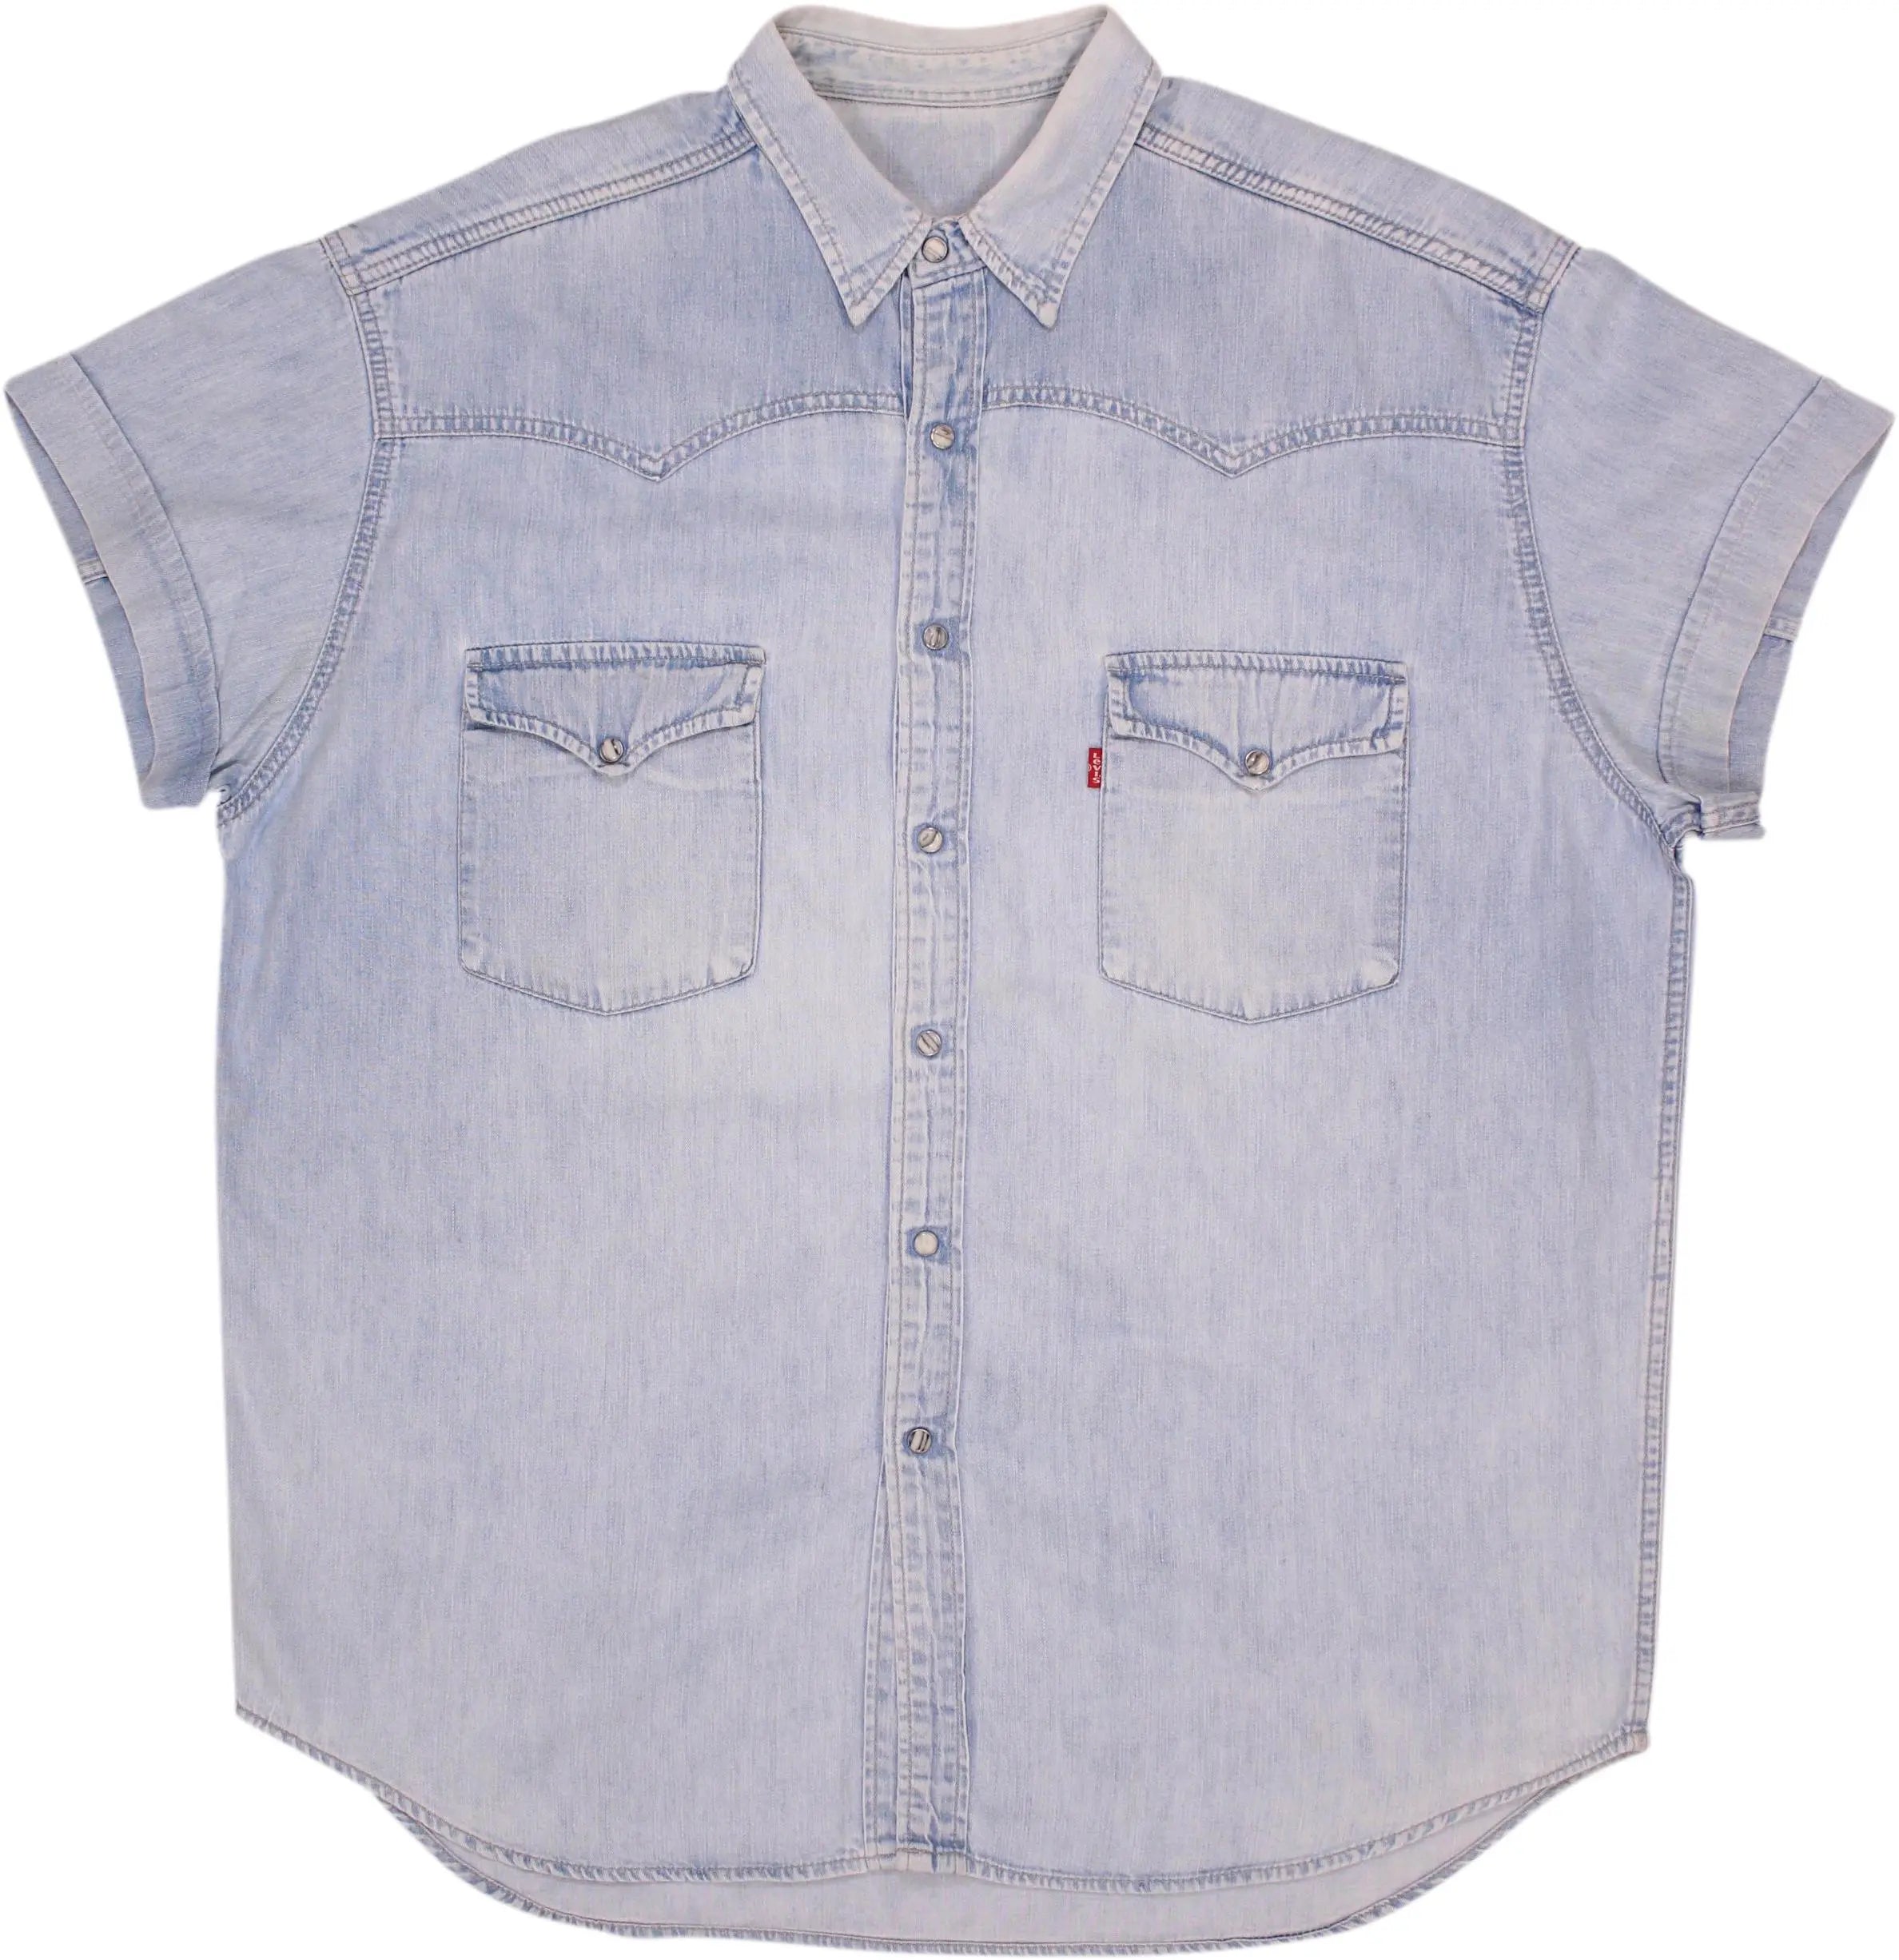 Levi's - Levi's Denim Short Sleeve Shirt- ThriftTale.com - Vintage and second handclothing